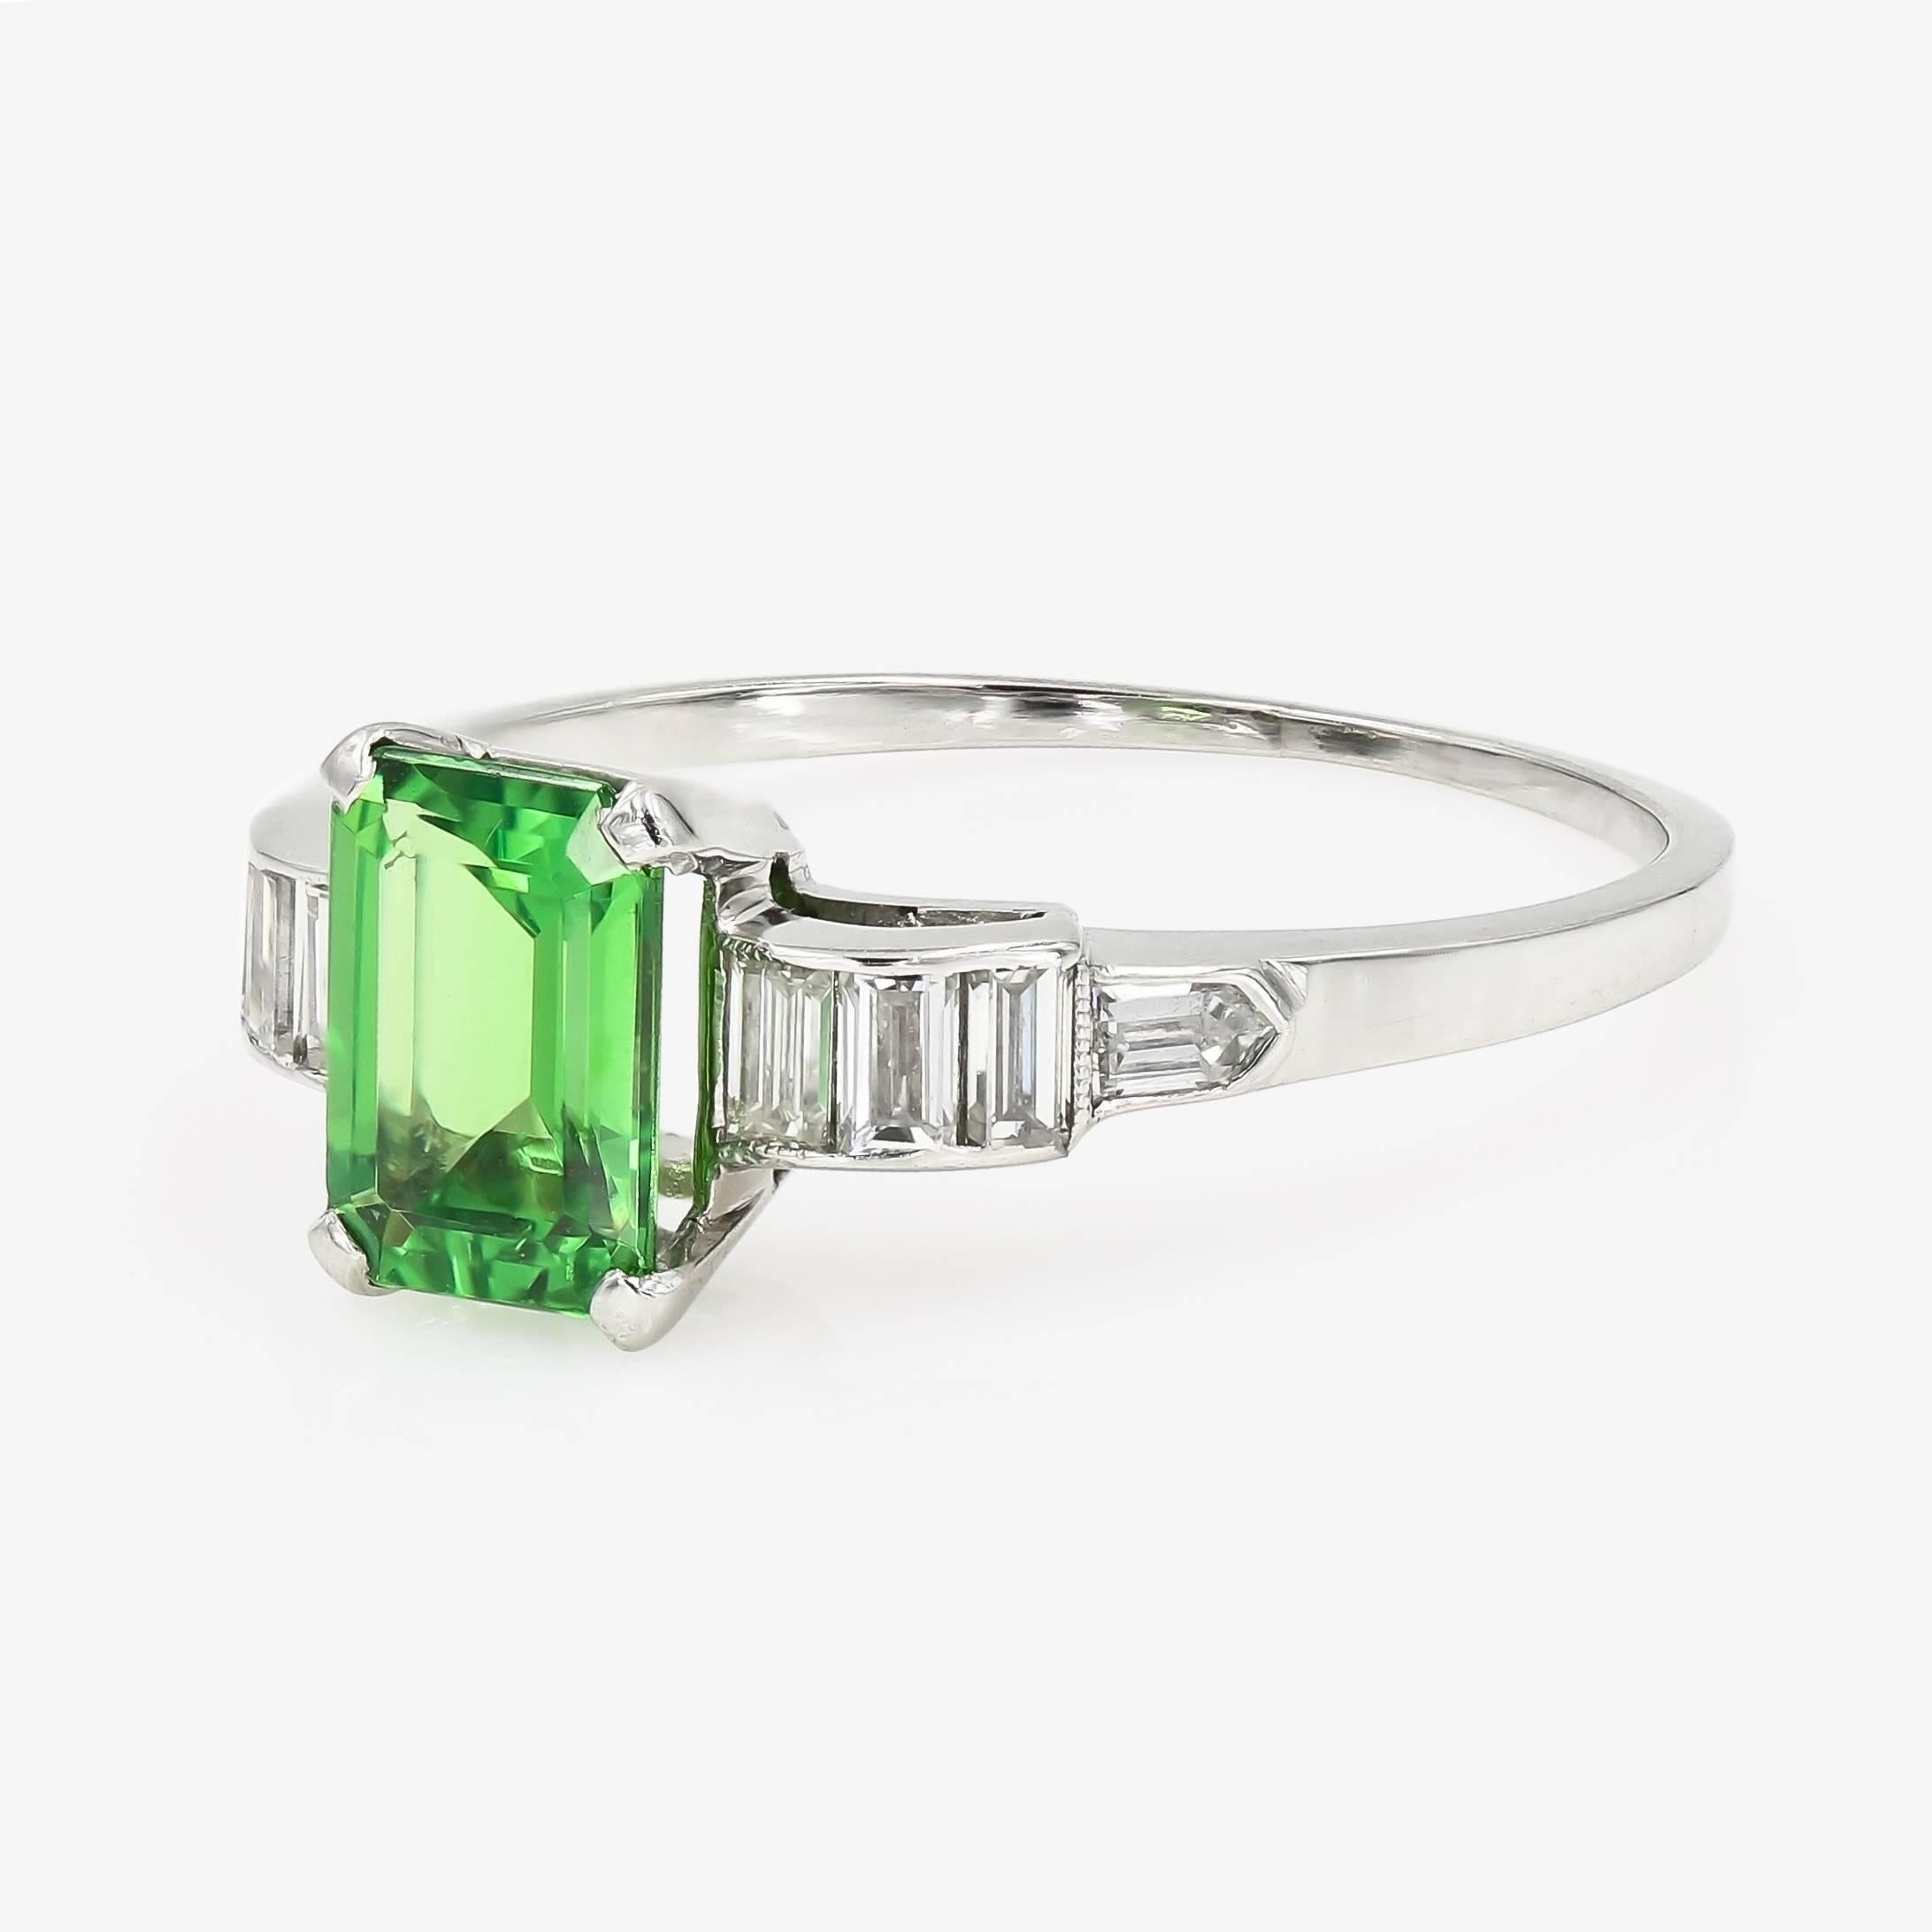 Contemporary Emerald Cut Natural Tsavorite and Baguette Diamond Ring in Platinum